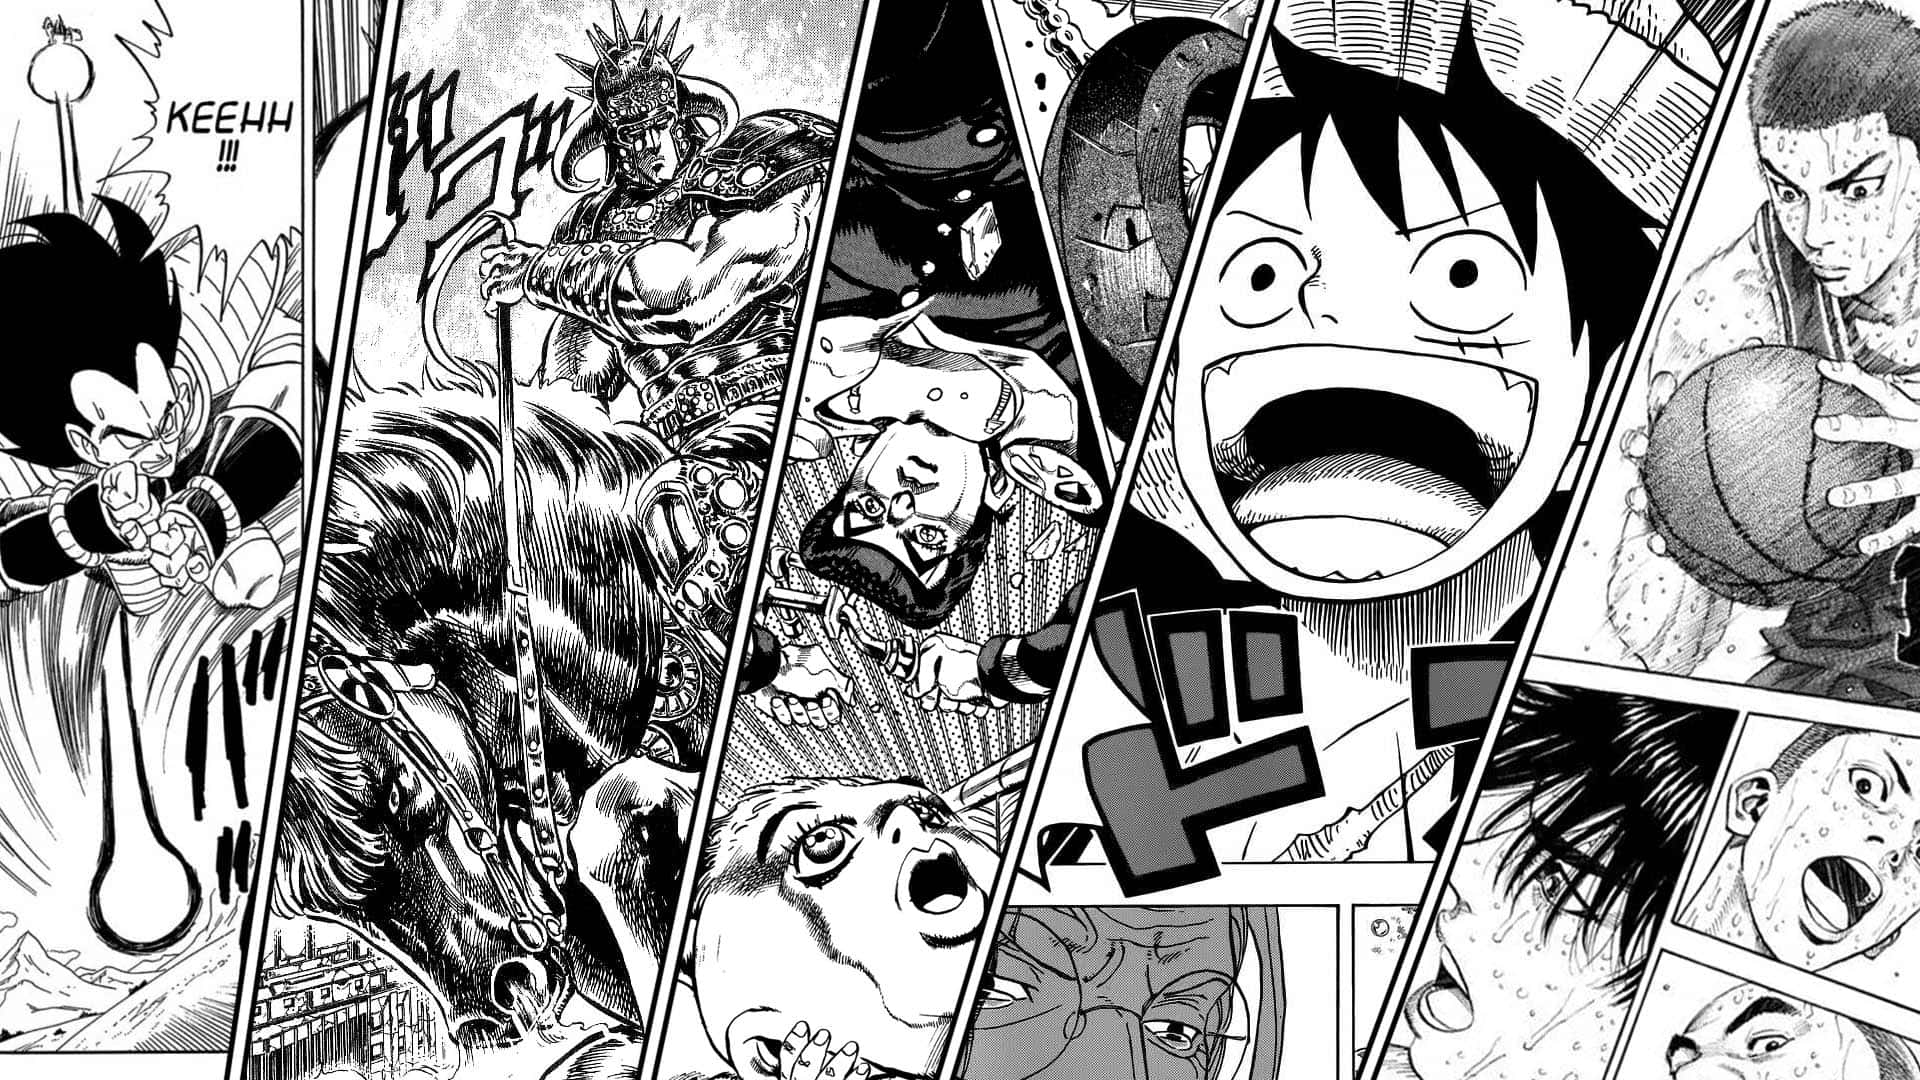 Manga Art Style Panel Scene